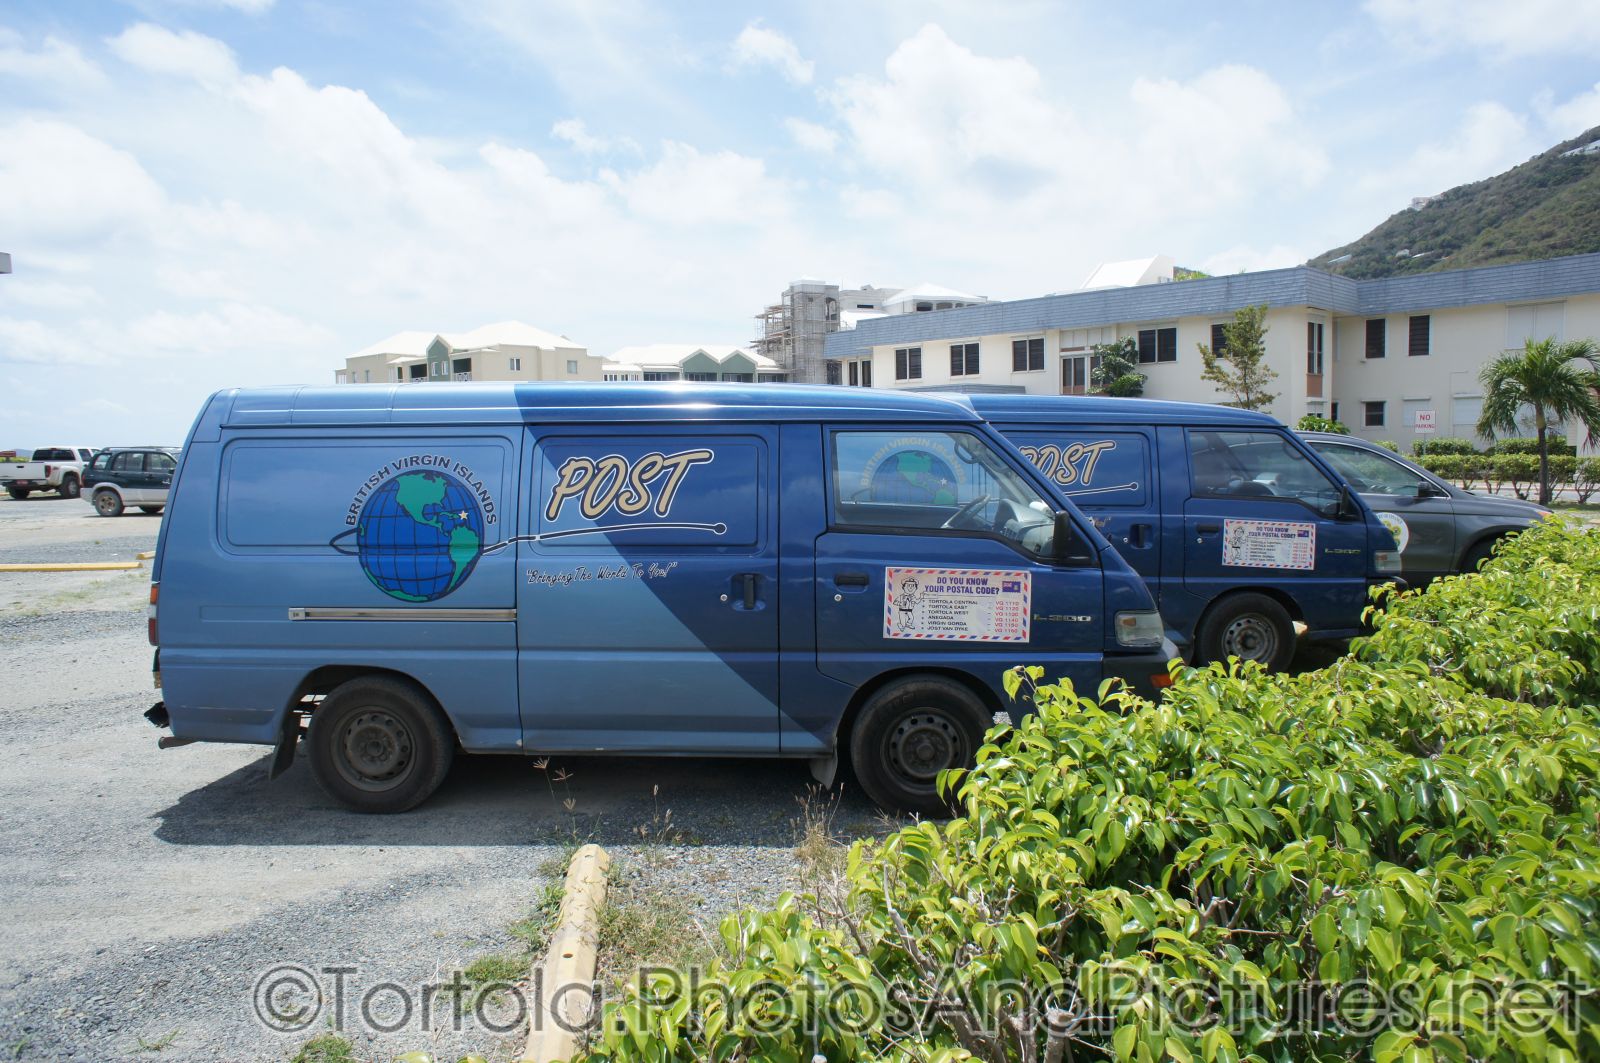 Tortola Postage Cost information posted on POST van.jpg
